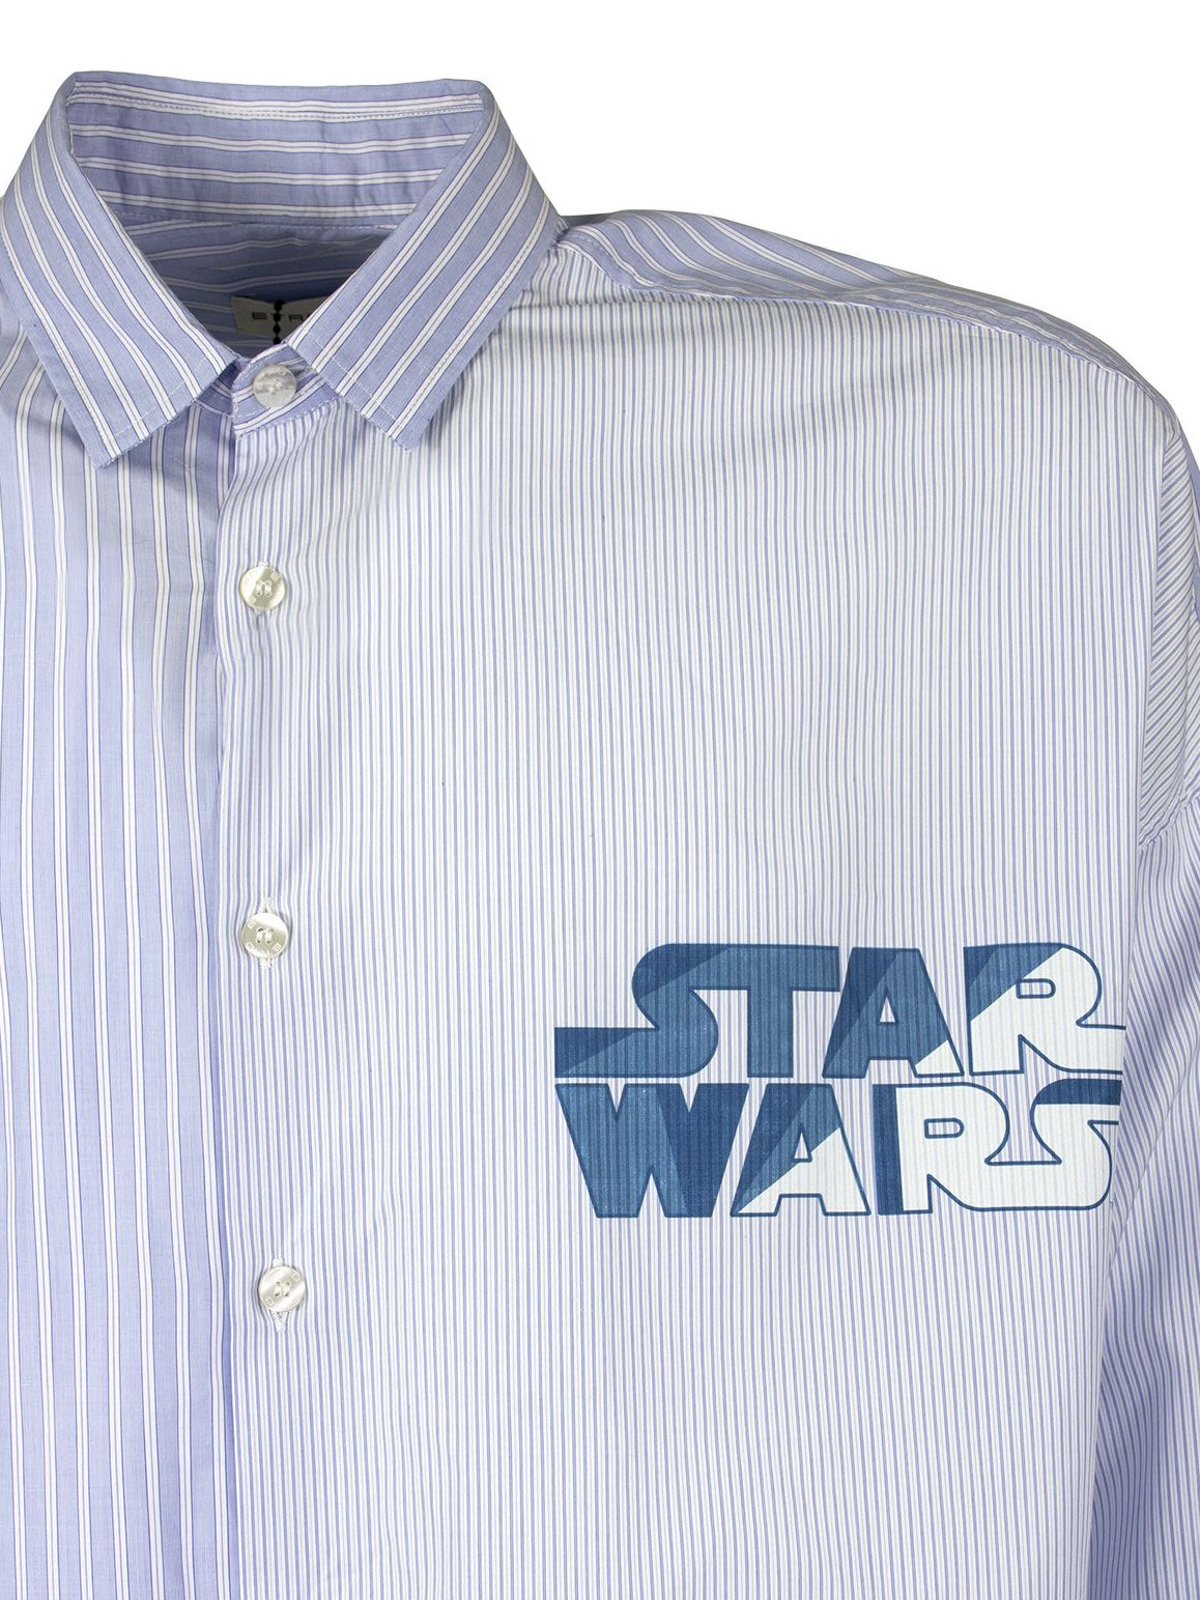 Camisas Etro - Camisa - Star Wars - 1K2557128200 | iKRIX tienda